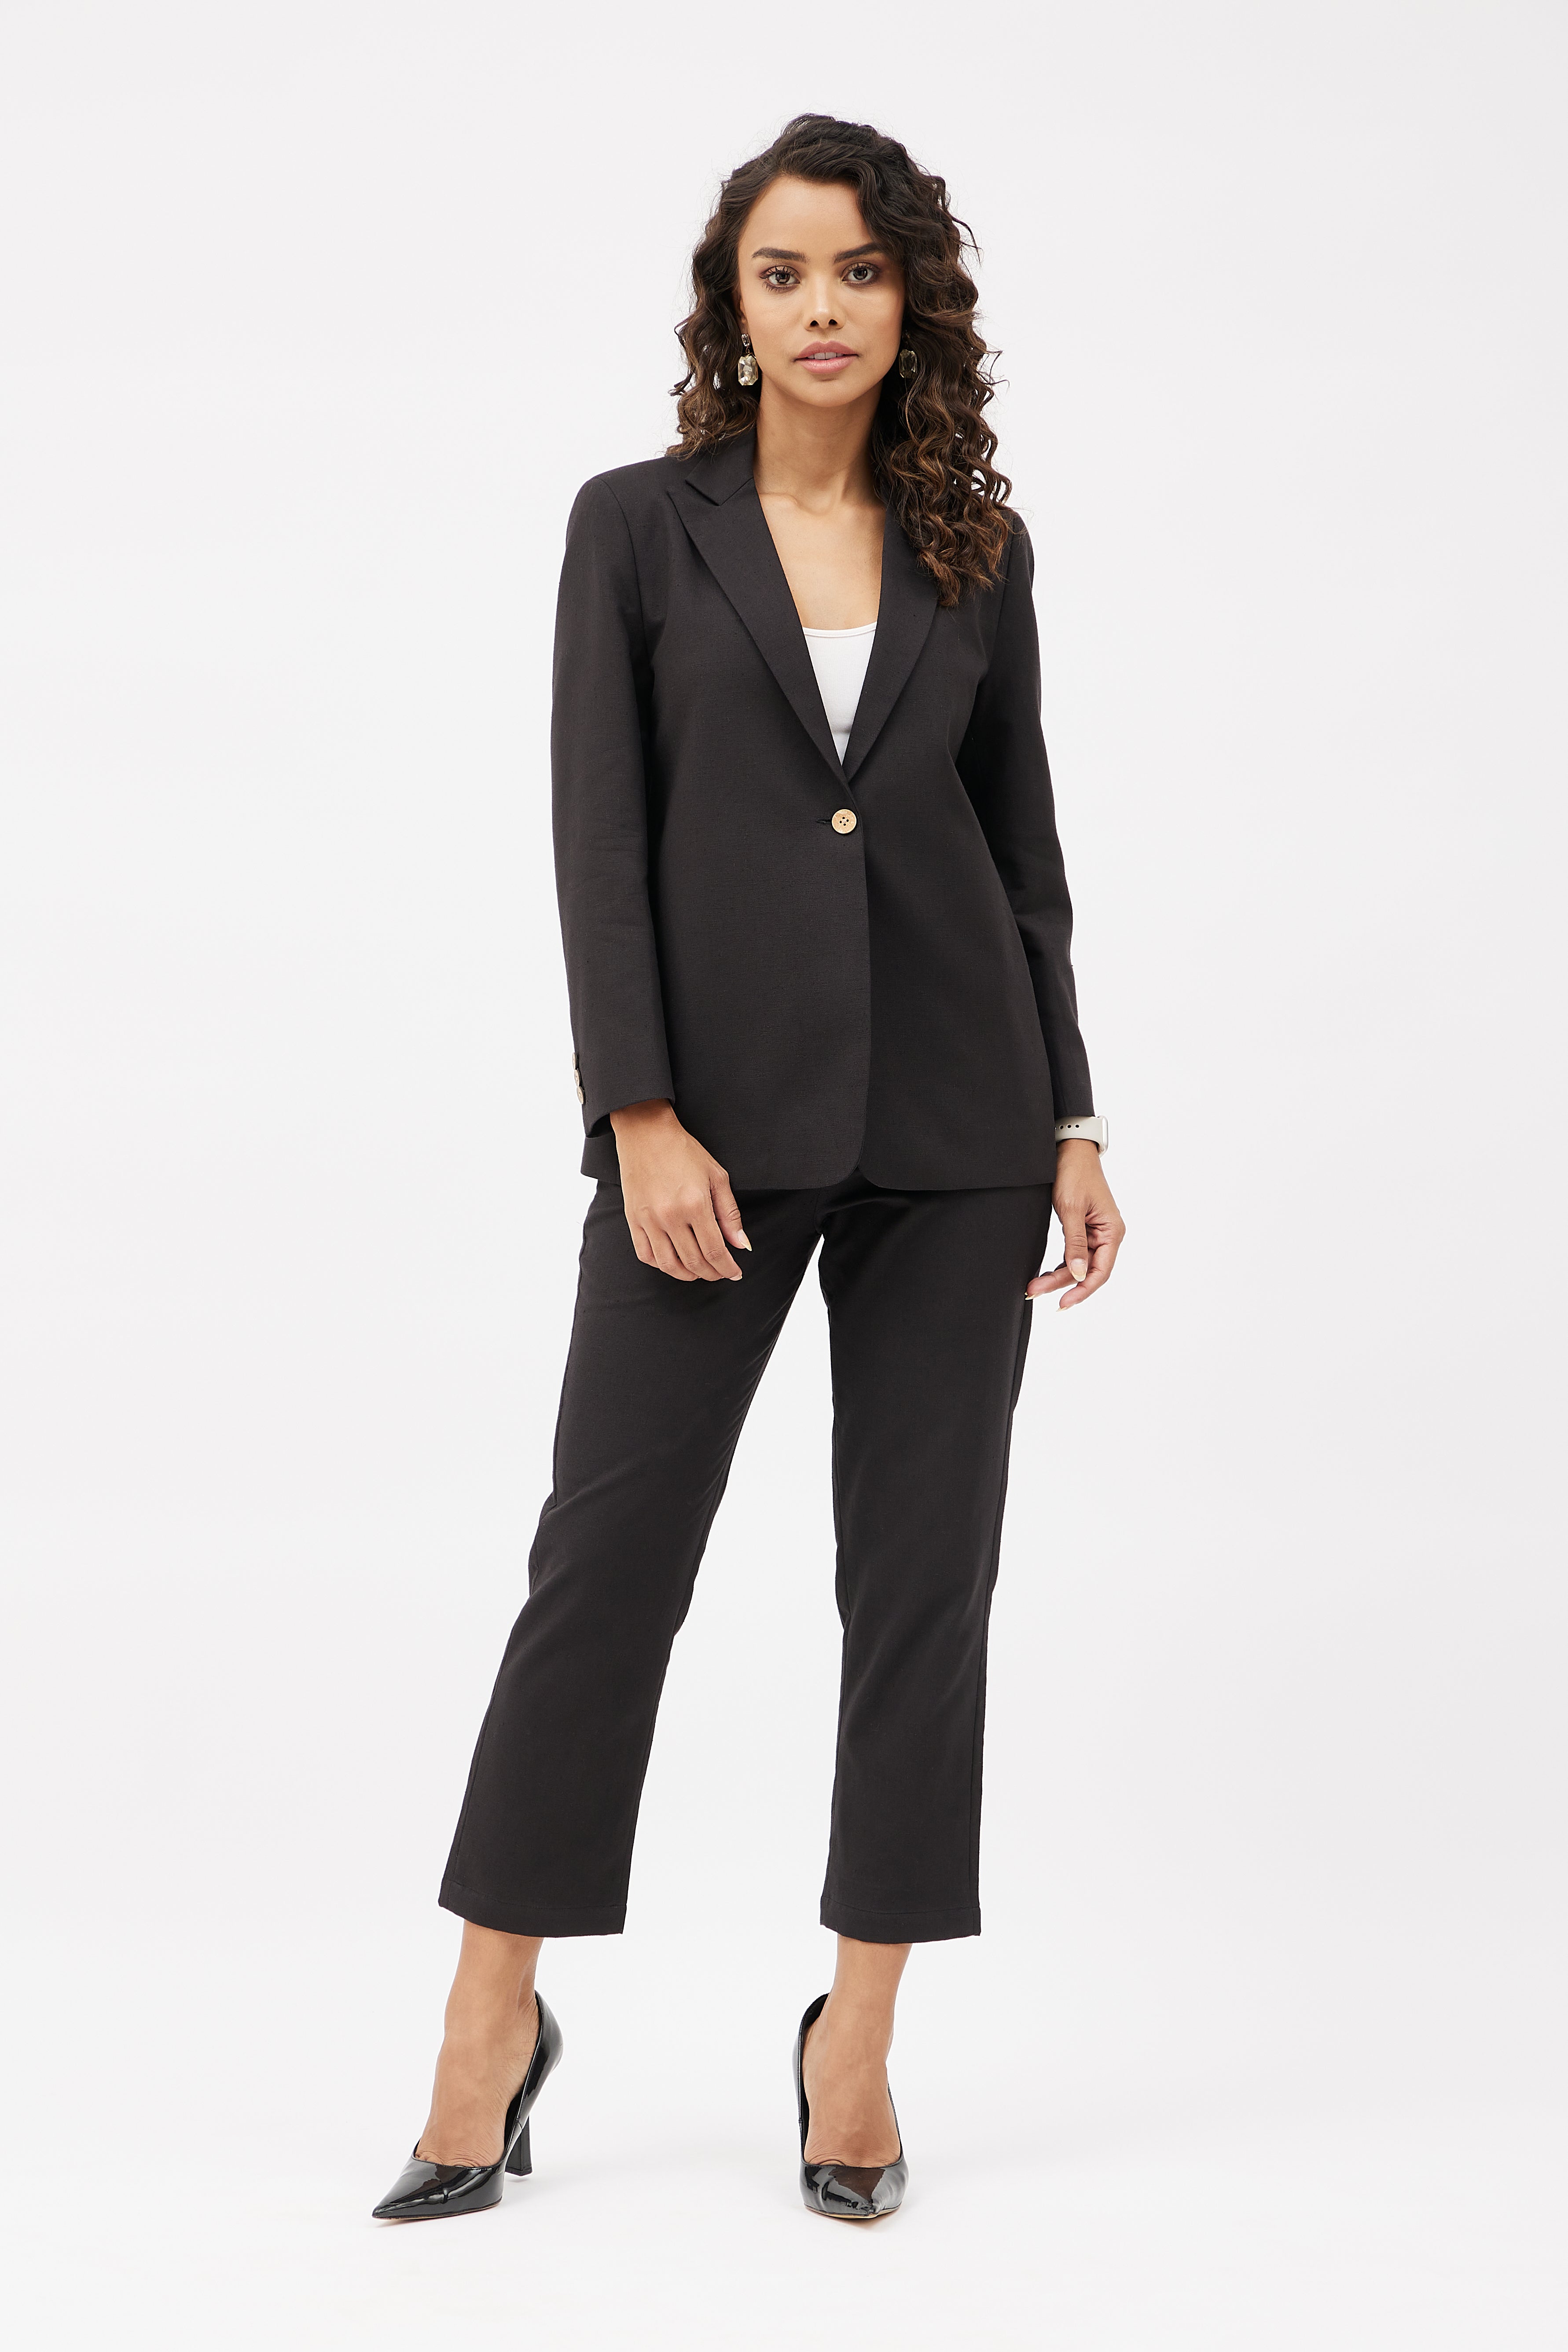 HANGUP Suits  Buy HANGUP Blazer Shirt And Trouser Set Of 3 Online   Nykaa Fashion